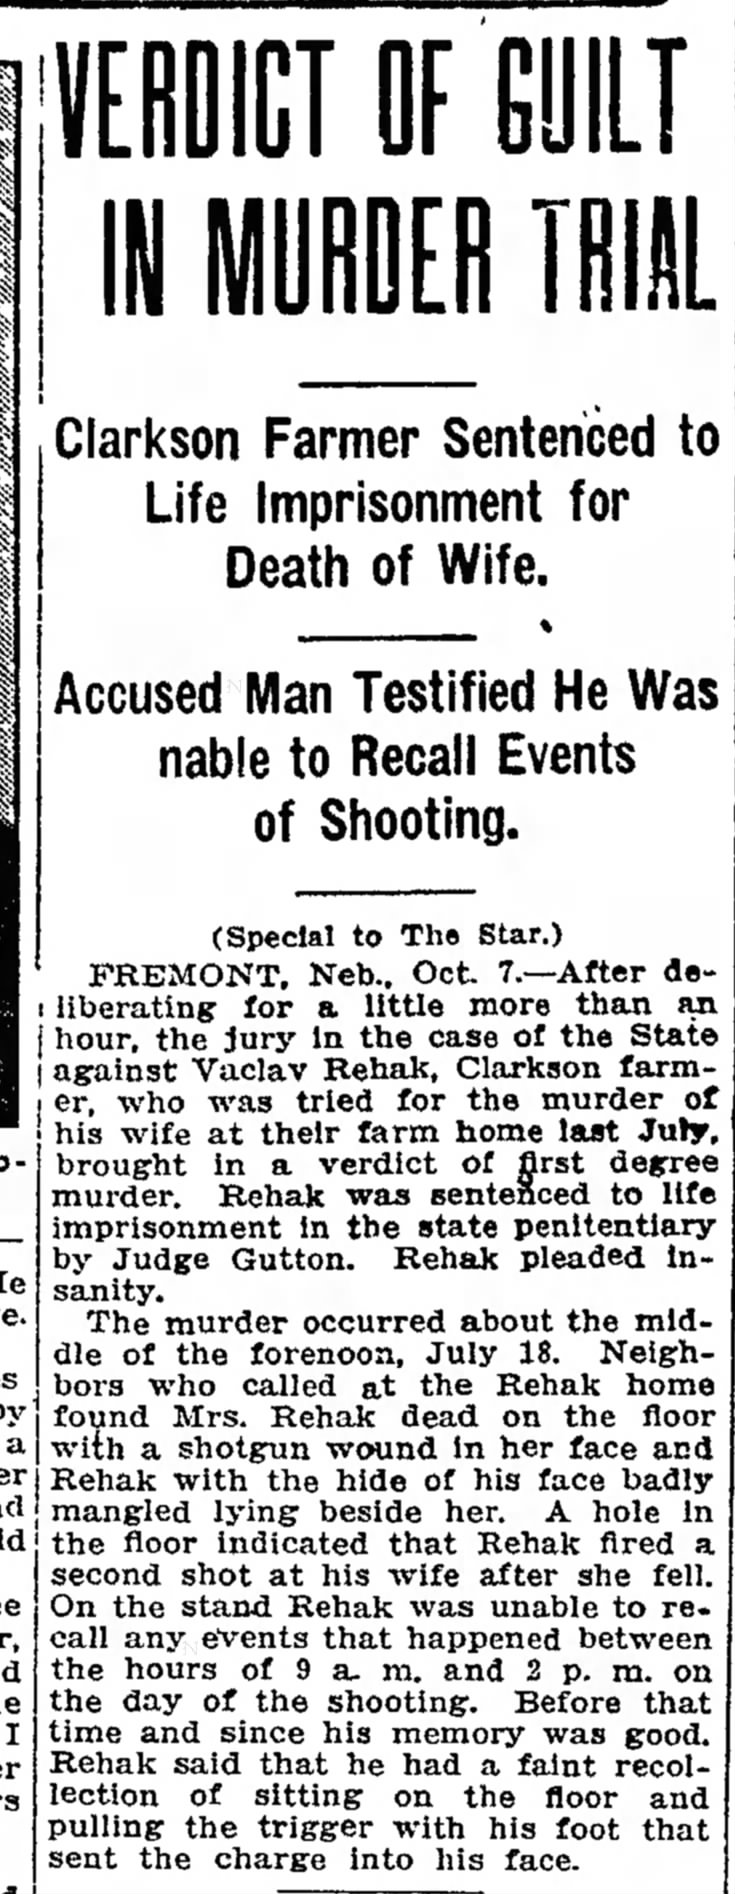 Lincoln Star 7 October 1917
Rehak kills wife